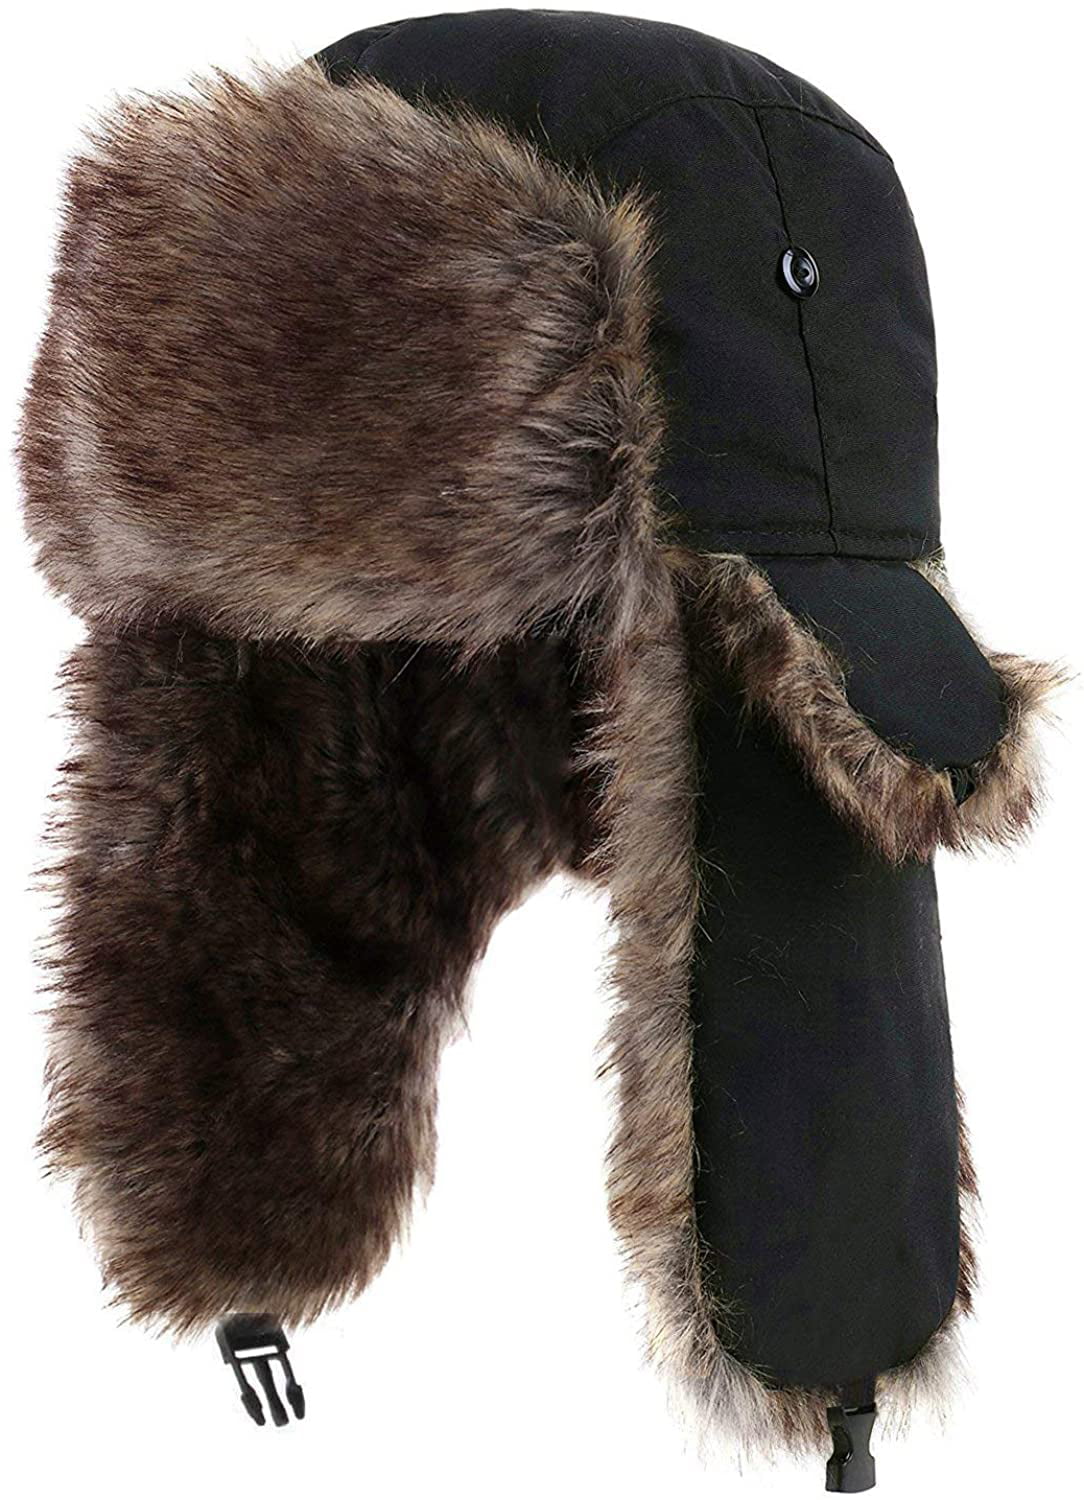 Women Russian Cap with Mask Ear Flaps Warm Ushanka Ski Hat Faux Fur Trooper Caps Jane Shine Winter Trapper Hats 